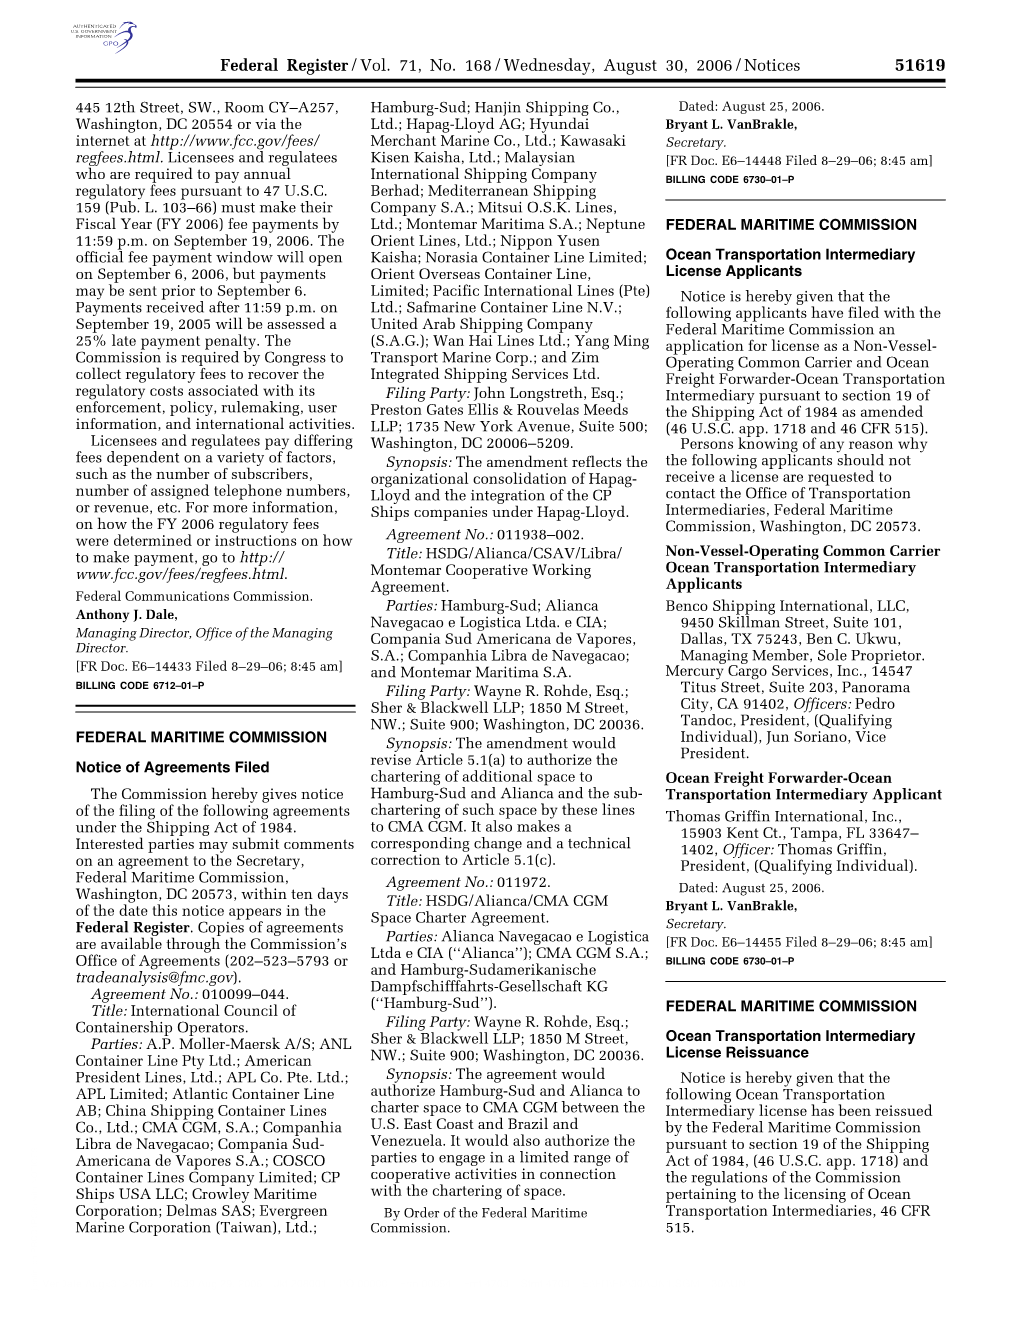 Federal Register/Vol. 71, No. 168/Wednesday, August 30, 2006